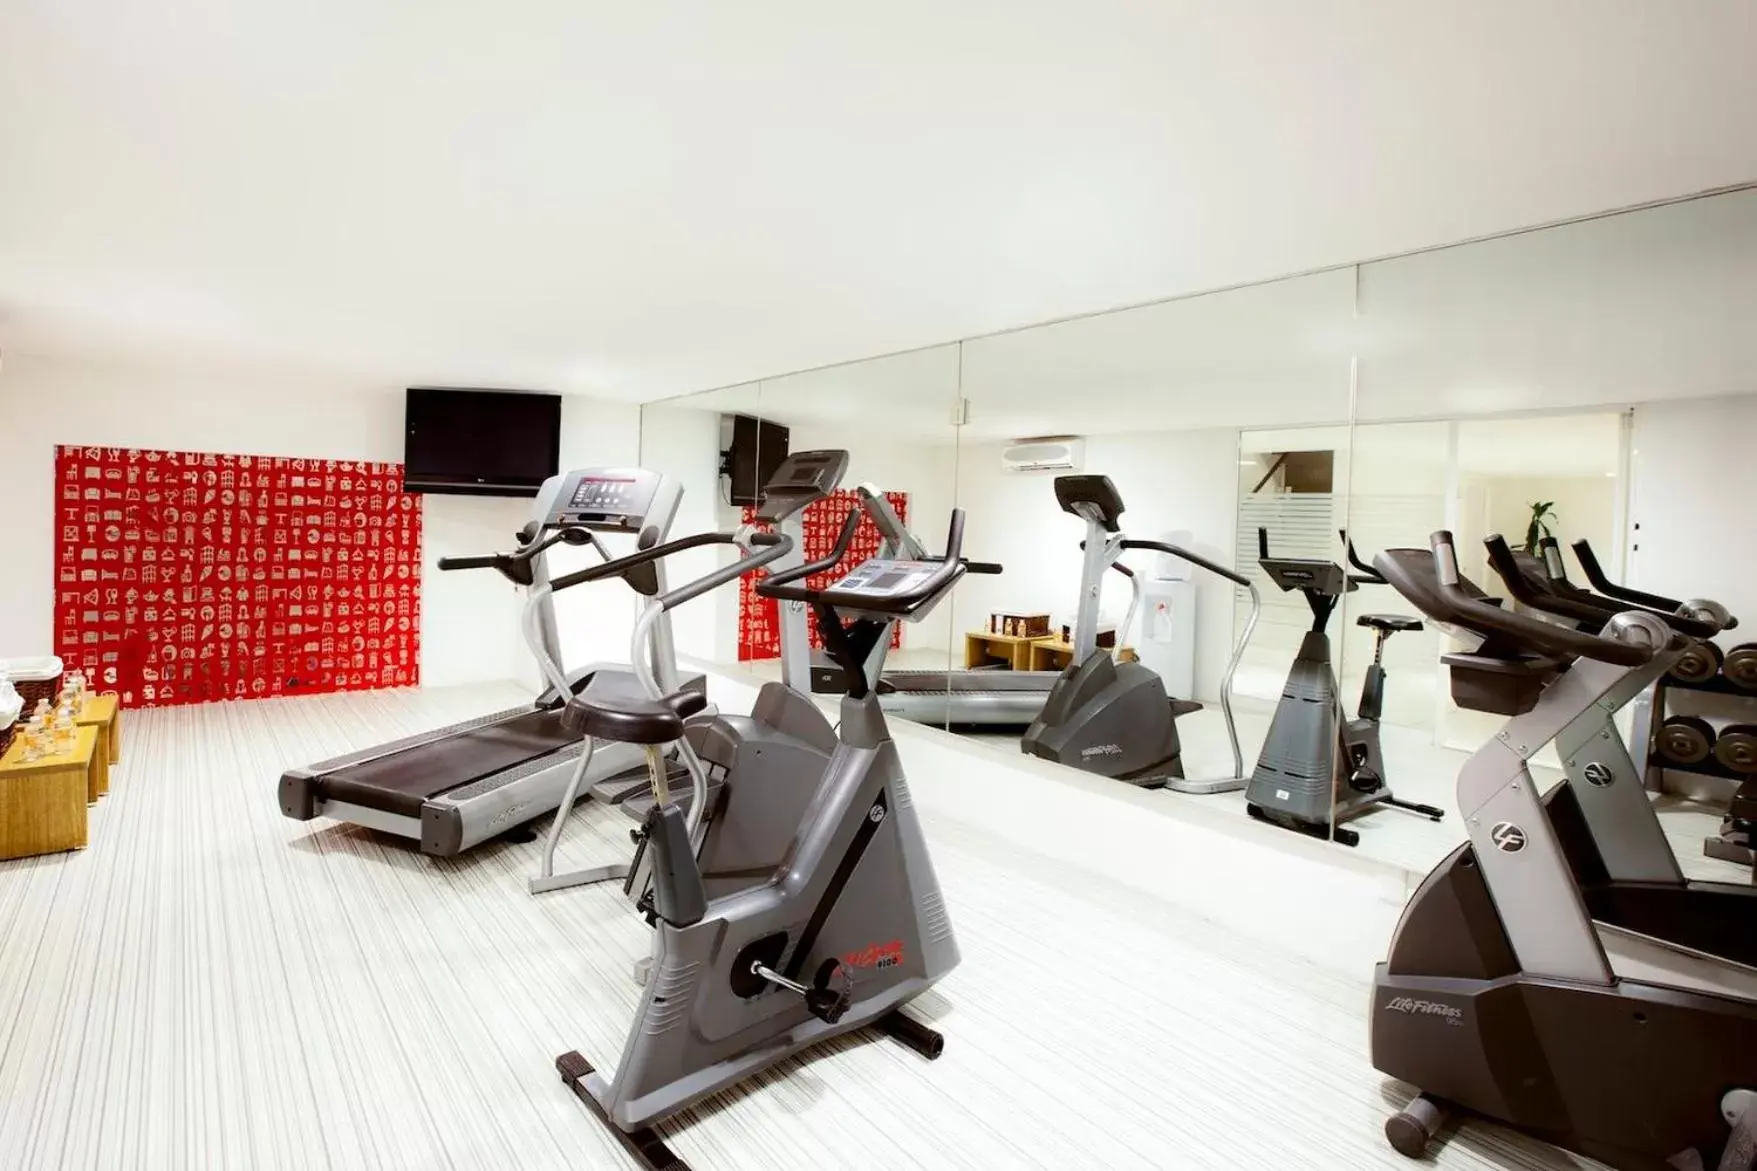 Fitness centre/facilities, Fitness Center/Facilities in Fiesta Inn Naucalpan